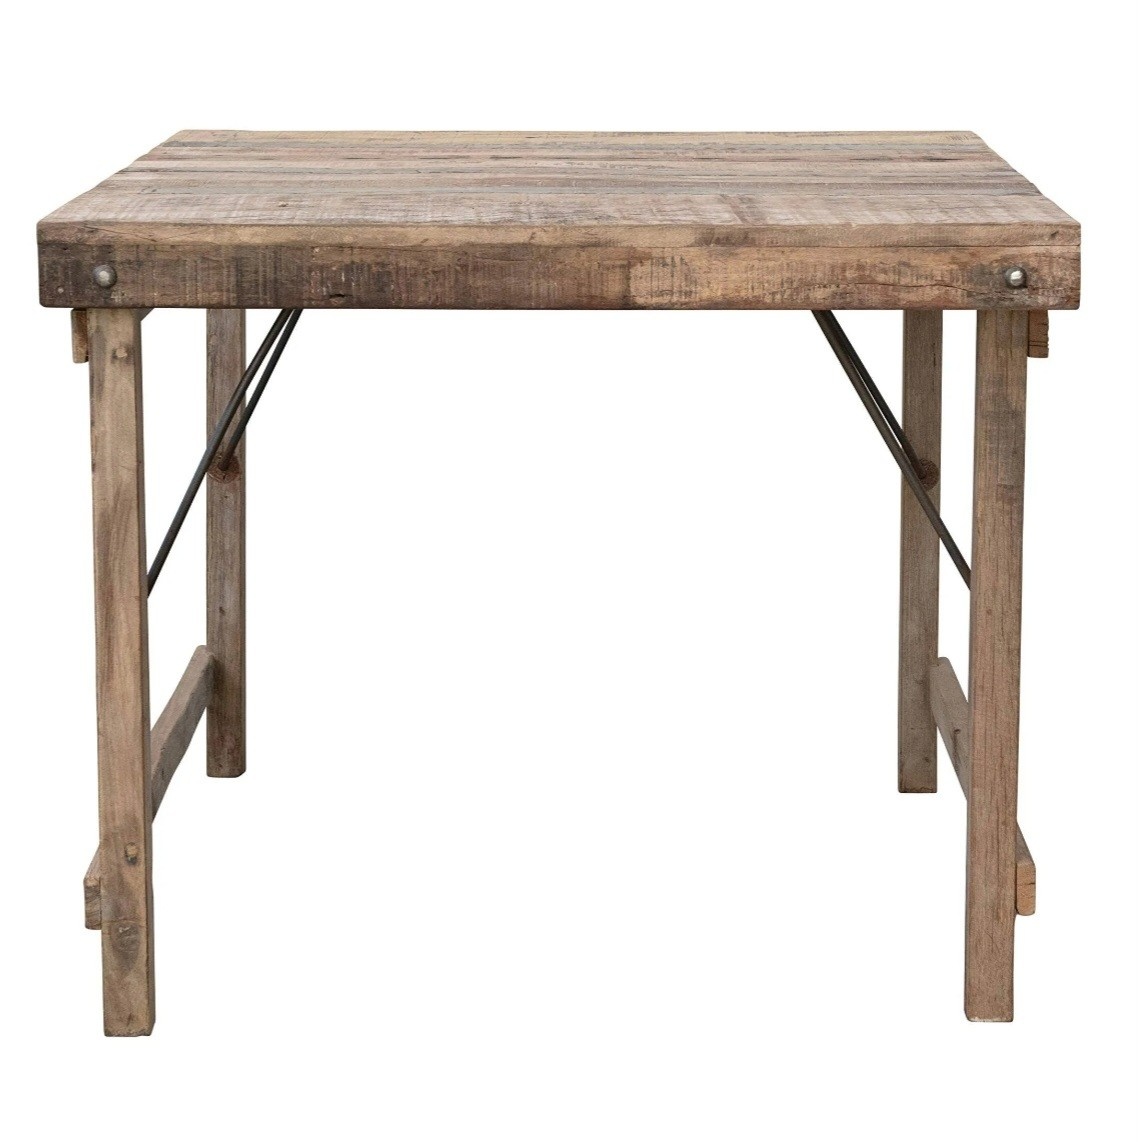 Order Folding Wooden Table Online